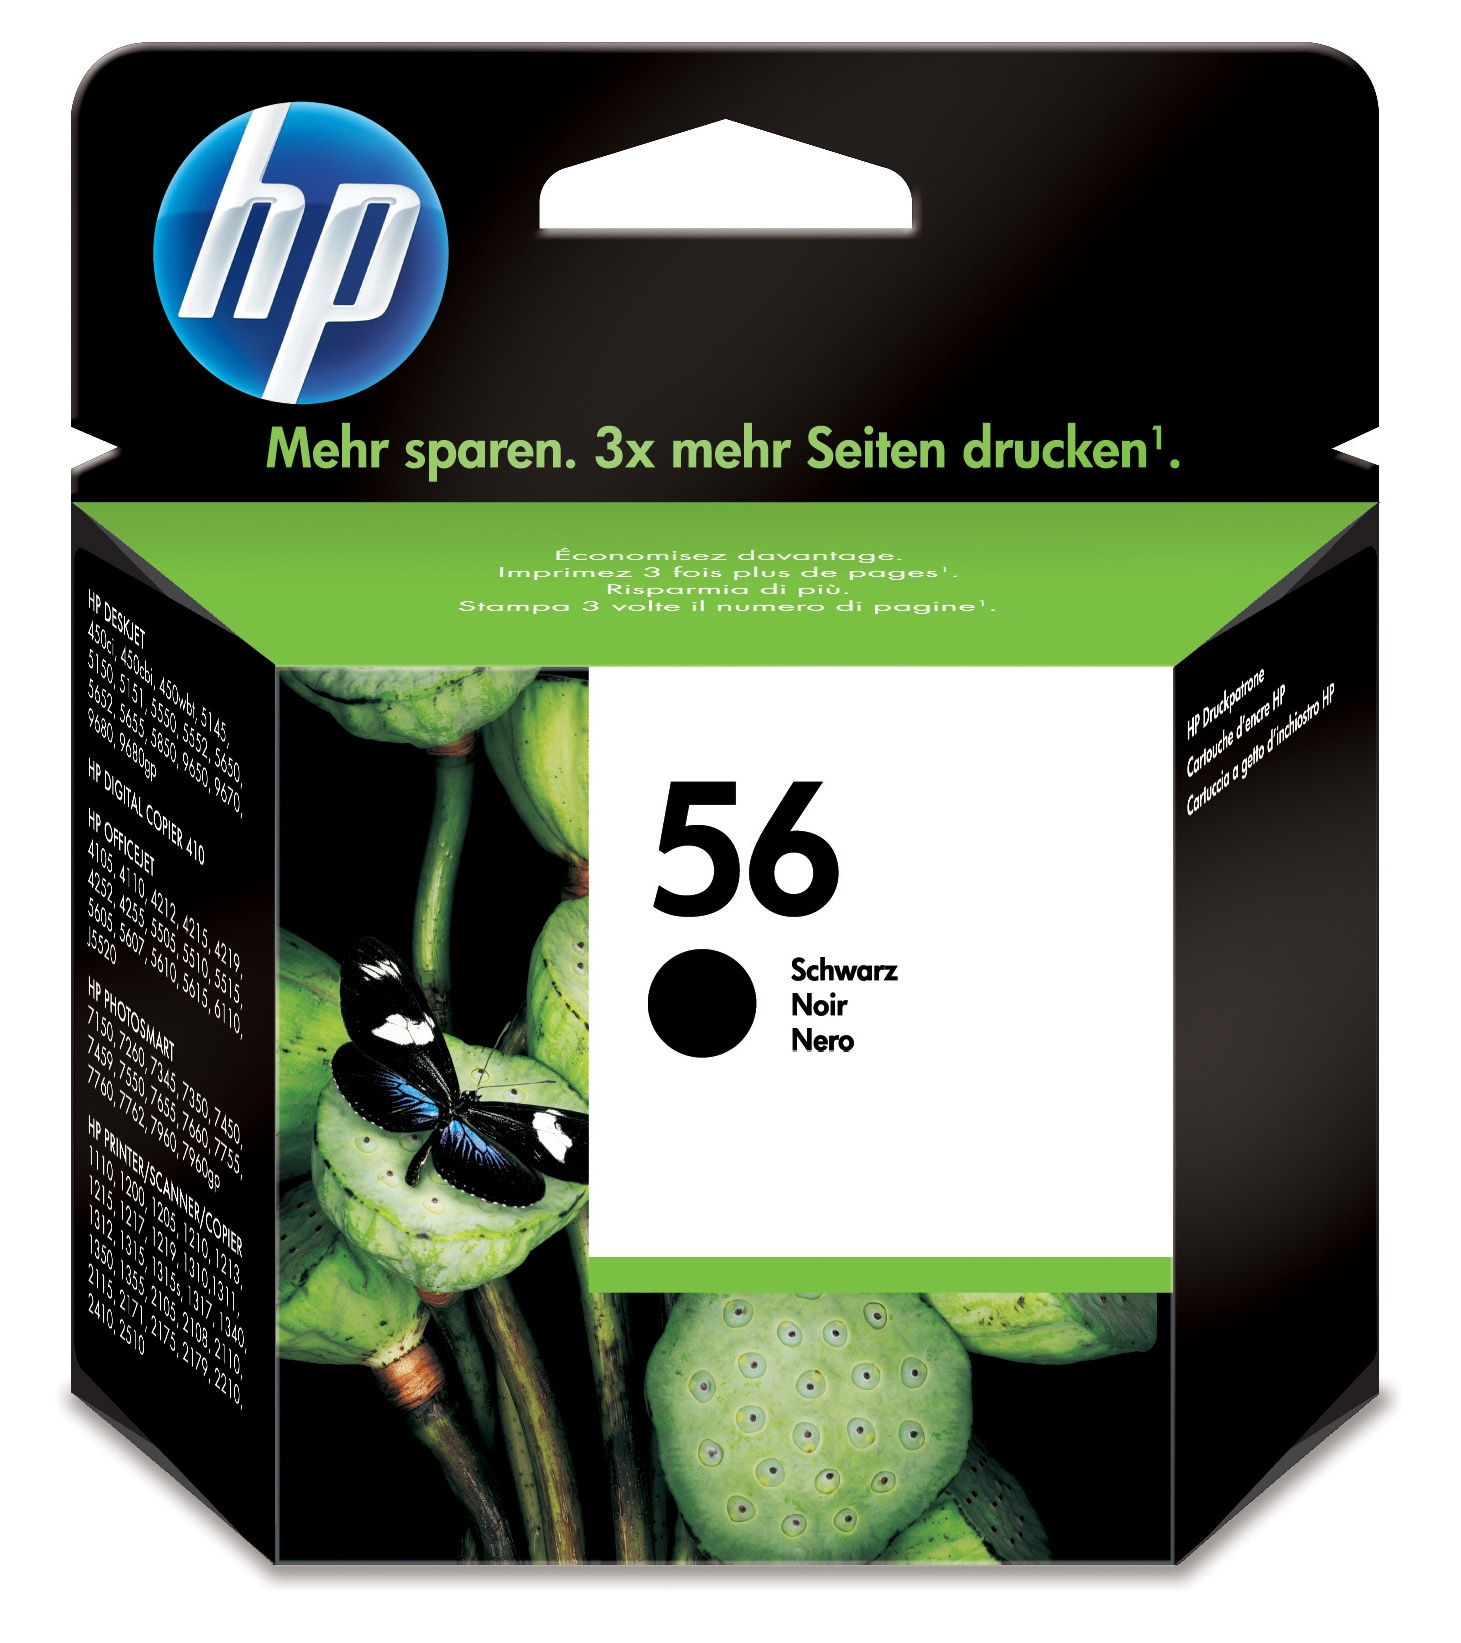 HP C6656AE/56 Printhead cartridge black, 520 pages ISO/IEC 24711 19ml for HP DeskJet Series 5550/OfficeJet 4200 Series/OfficeJet 5610/PhotoSmart 7660/PSC 1110